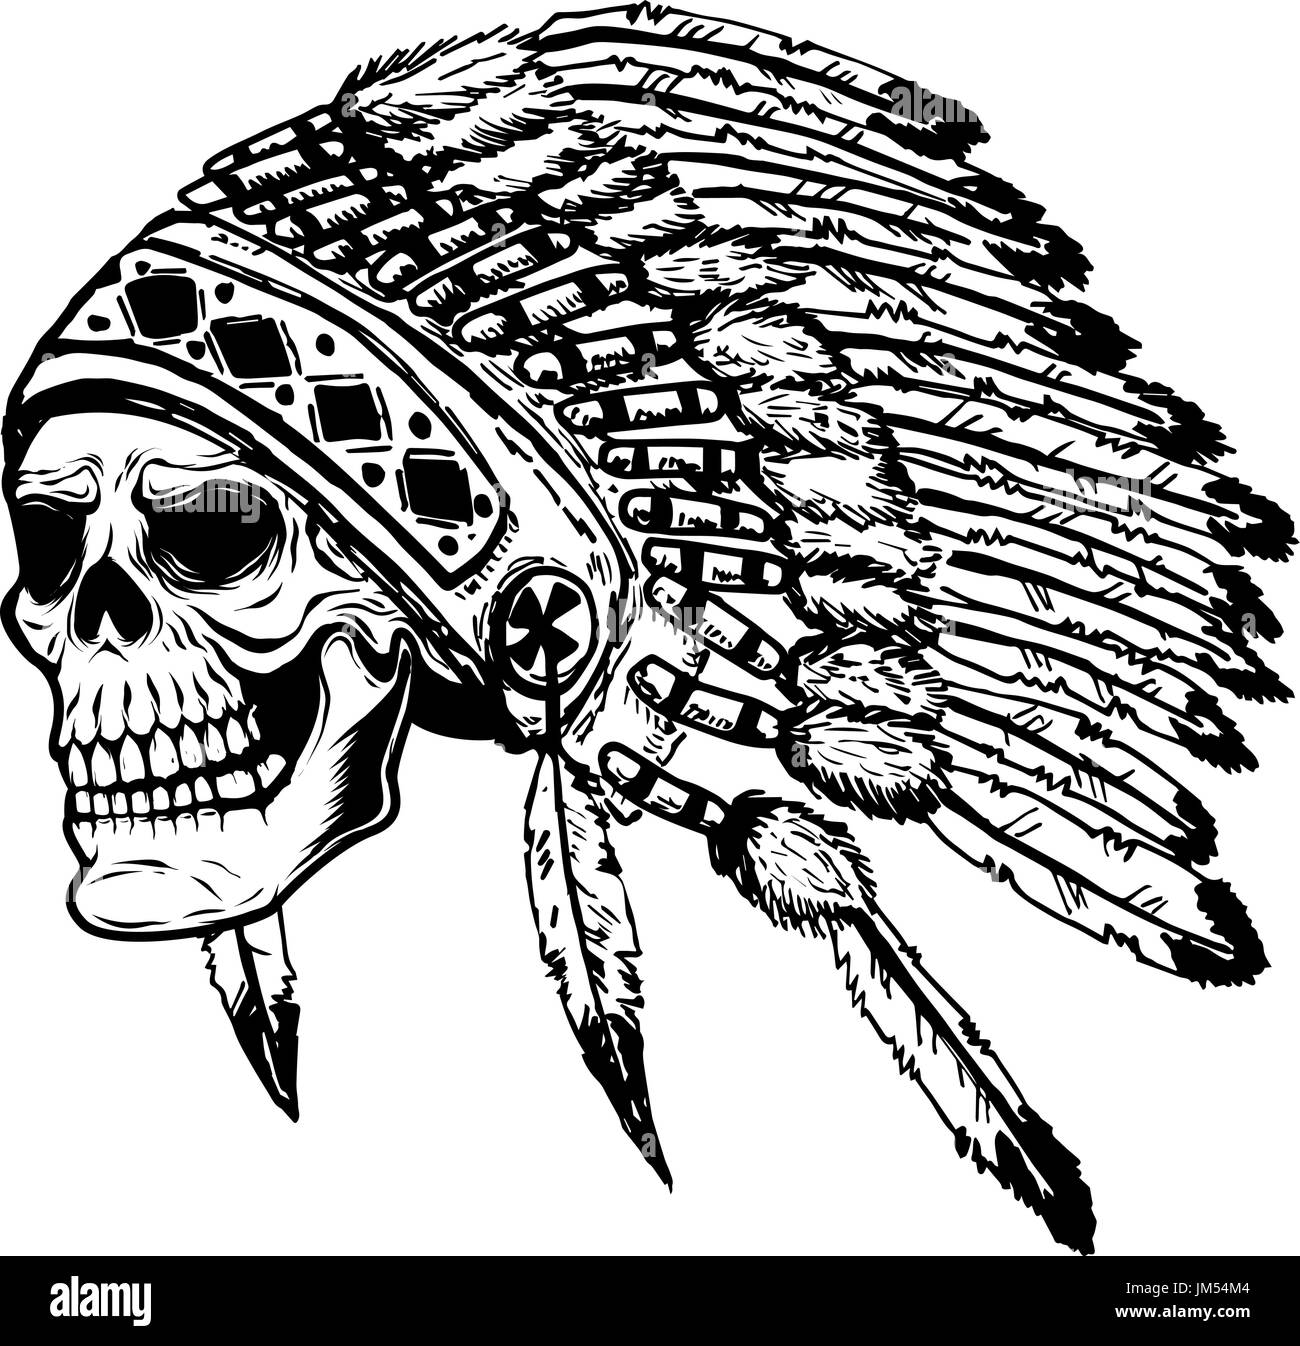 Schädel in native american indian chief Kopfschmuck. Gestaltungselement für Poster, T-shirt. Vektor-Illustration. Stock Vektor